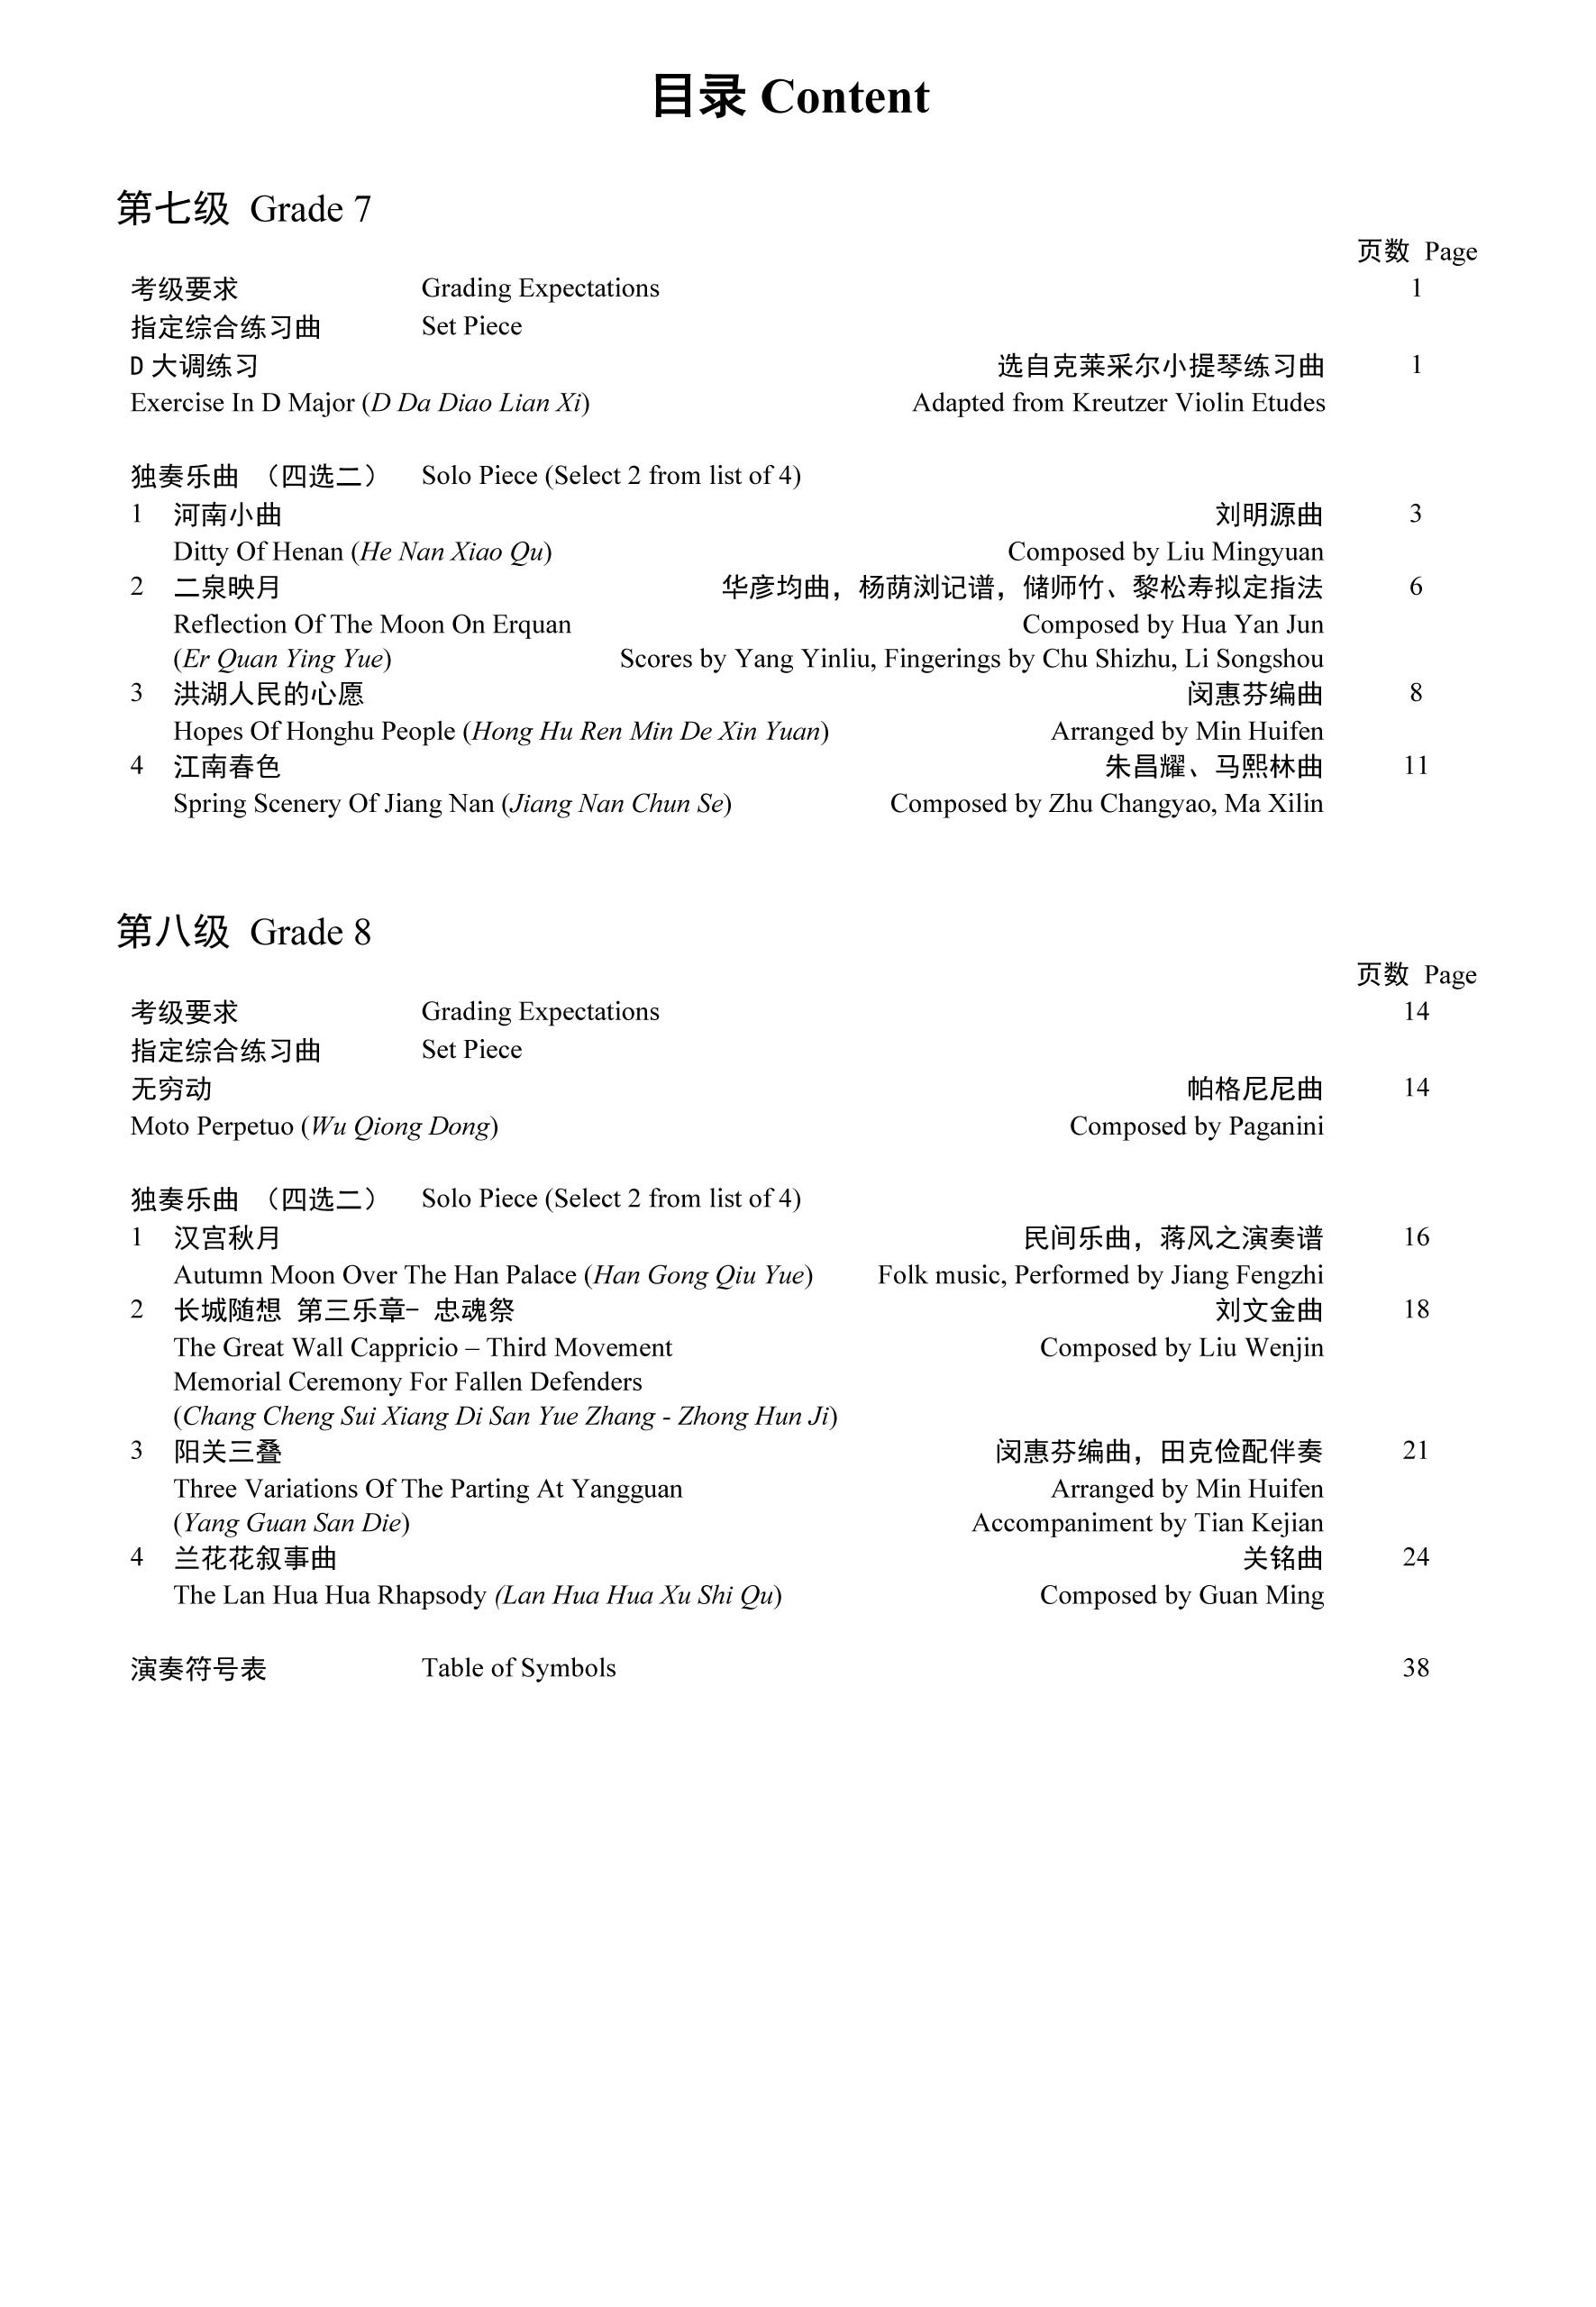 Erhu Grading Examination Book by Teng (Intermediate Grade 7-8) Content Page